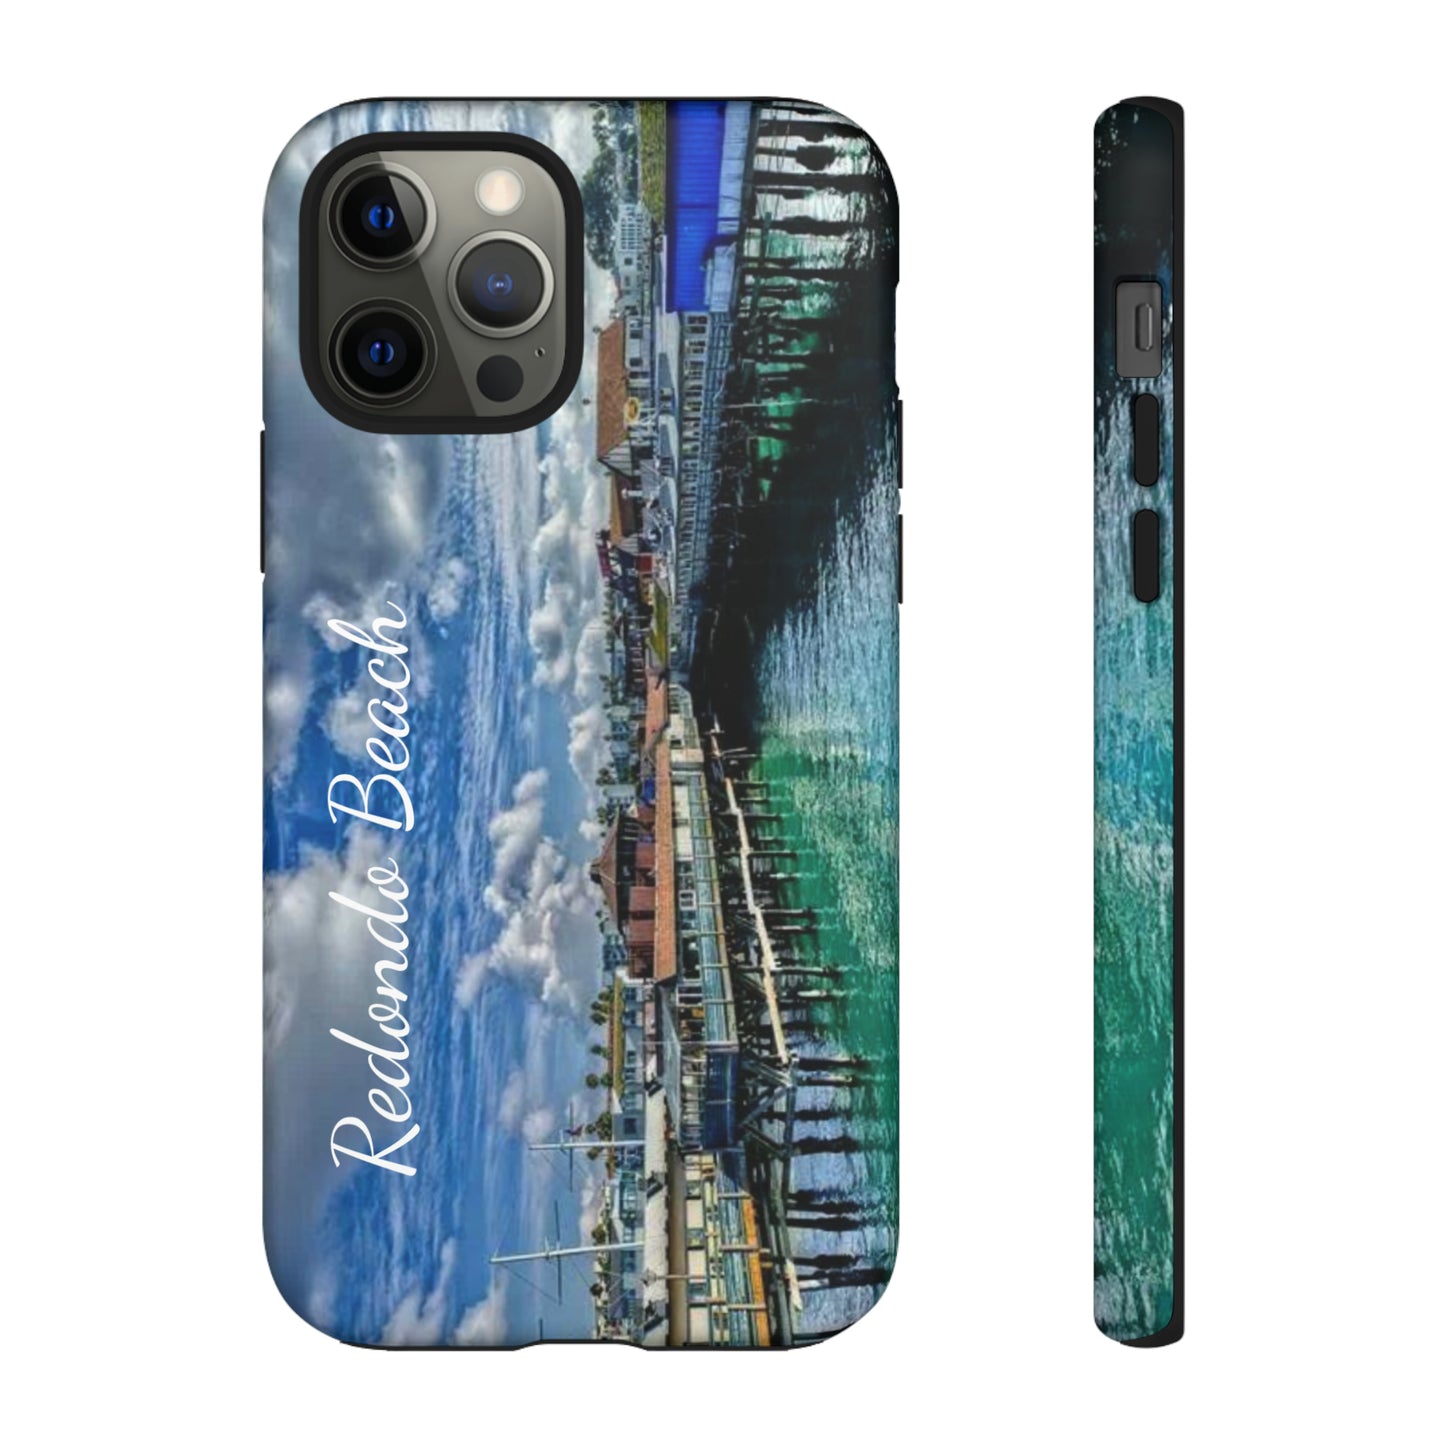 Redondo Beach California - All IPhone and Samsung Tough Cases